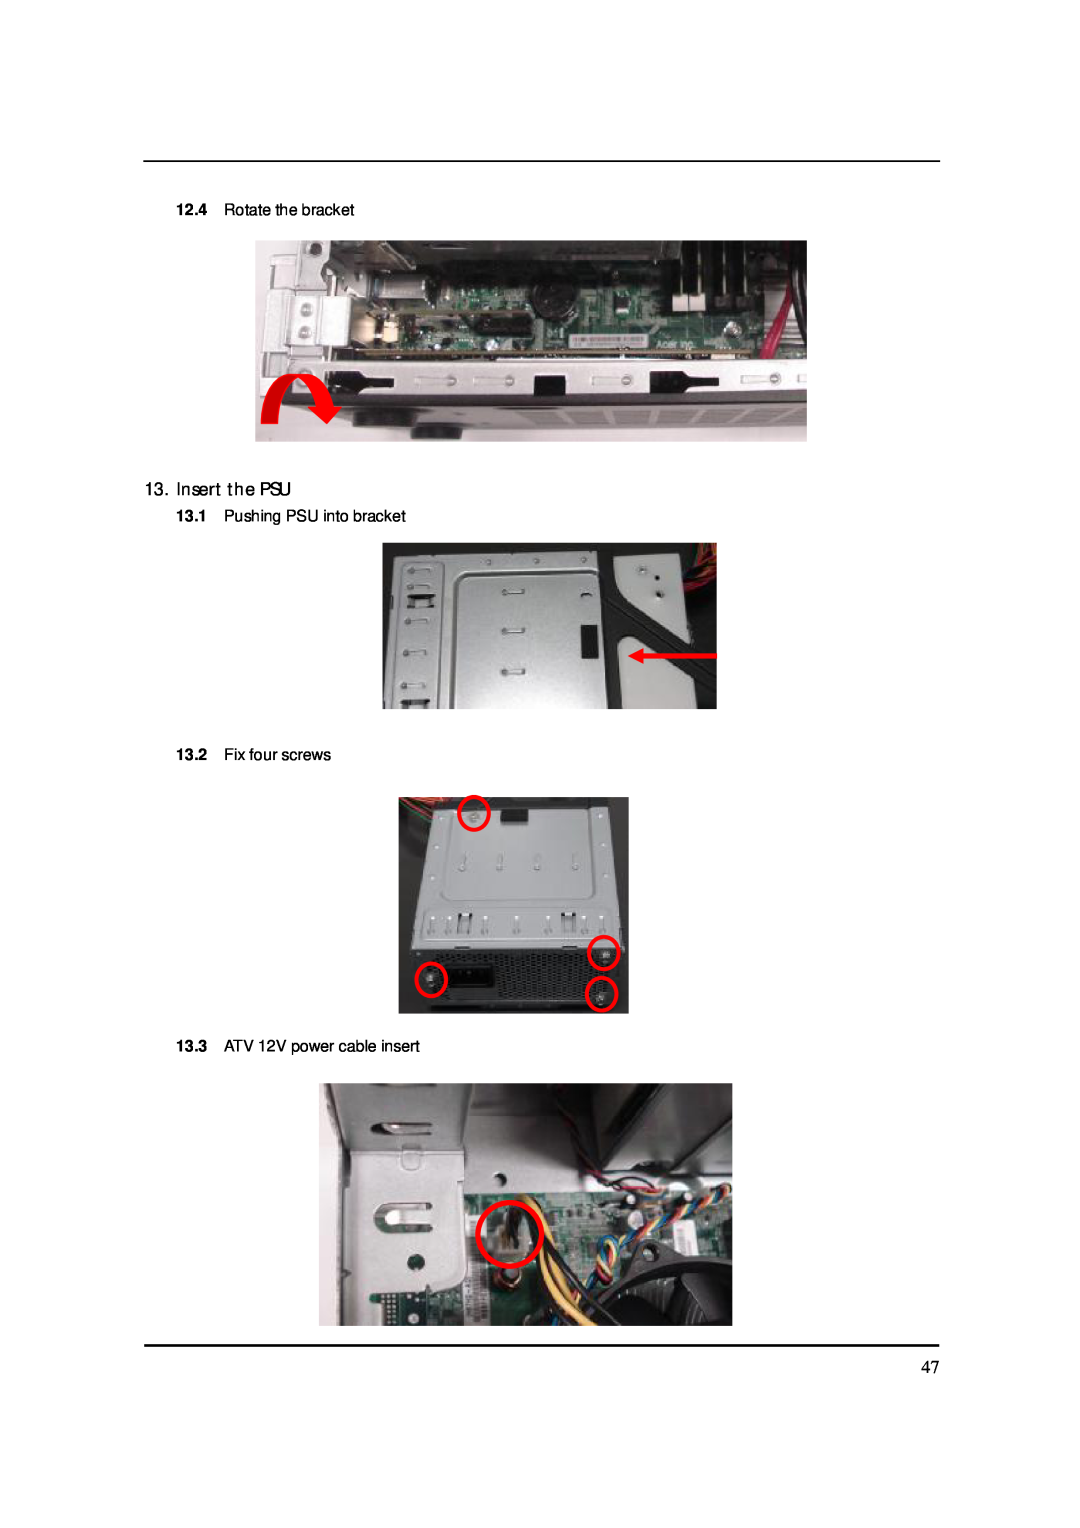 Acer S3811 Insert the PSU, Rotate the bracket, Pushing PSU into bracket 13.2 Fix four screws, ATV 12V power cable insert 